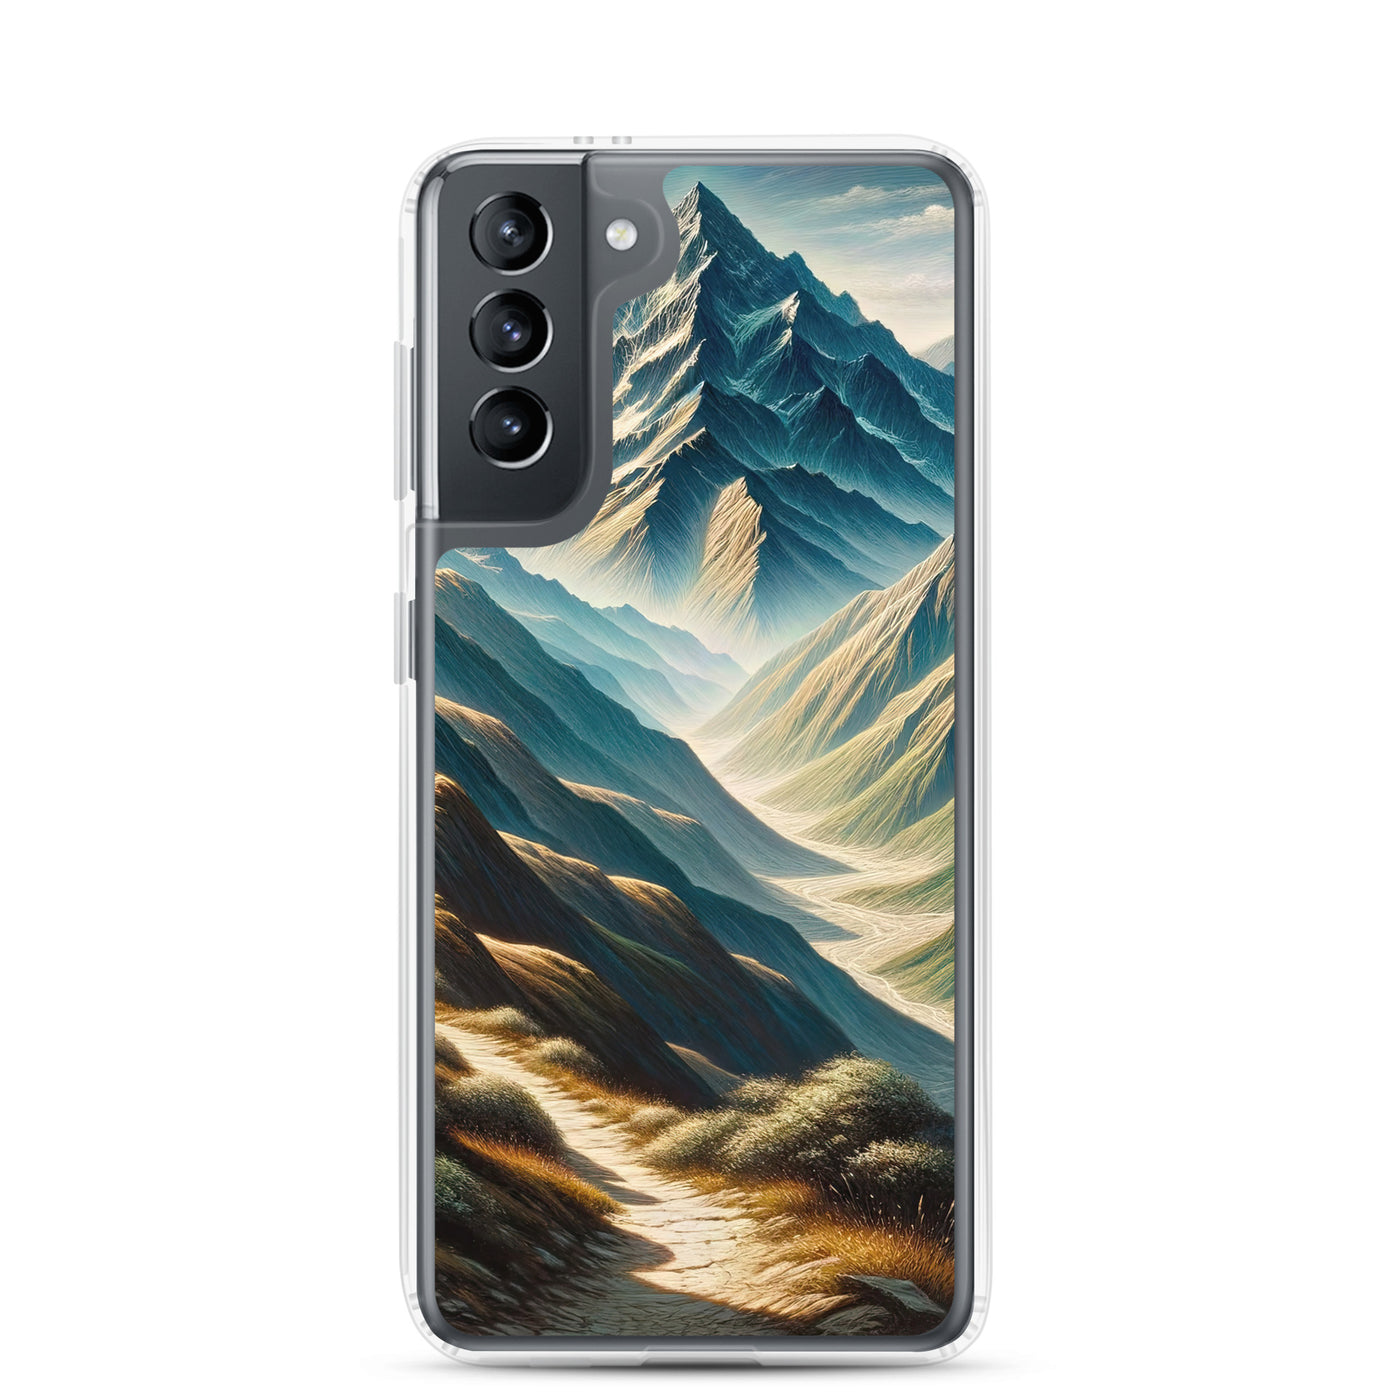 Berglandschaft: Acrylgemälde mit hervorgehobenem Pfad - Samsung Schutzhülle (durchsichtig) berge xxx yyy zzz Samsung Galaxy S21